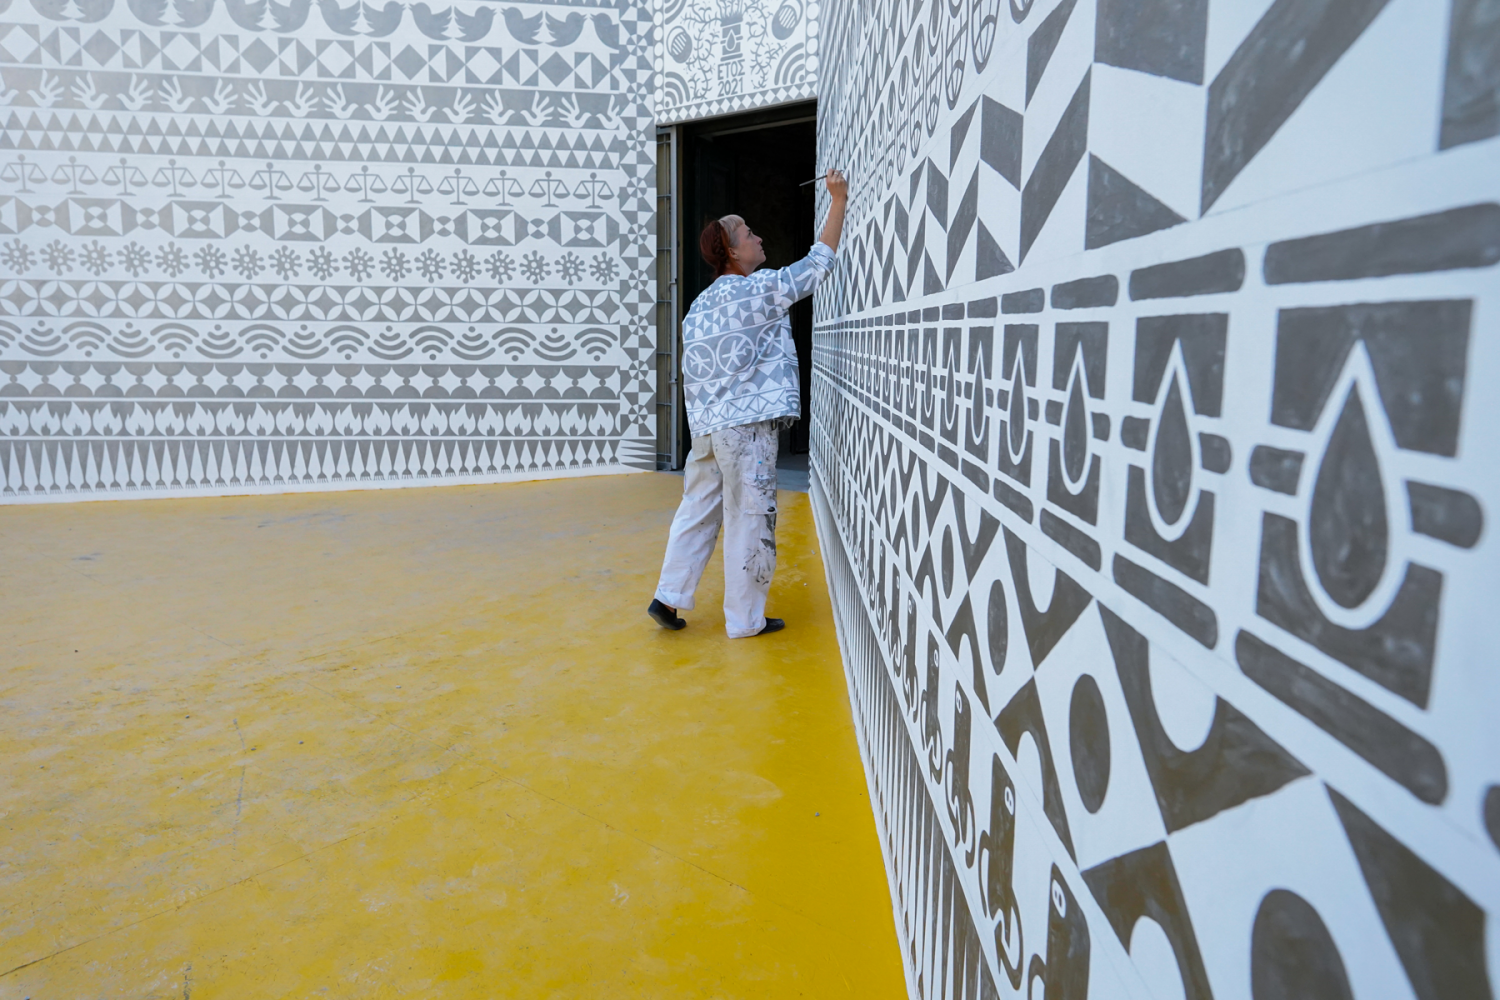 Navine G. Khan-Dossos, Ta Nea Xysta, 2021, Installation view from the 7thAthens Biennale 2021 ECLIPSE